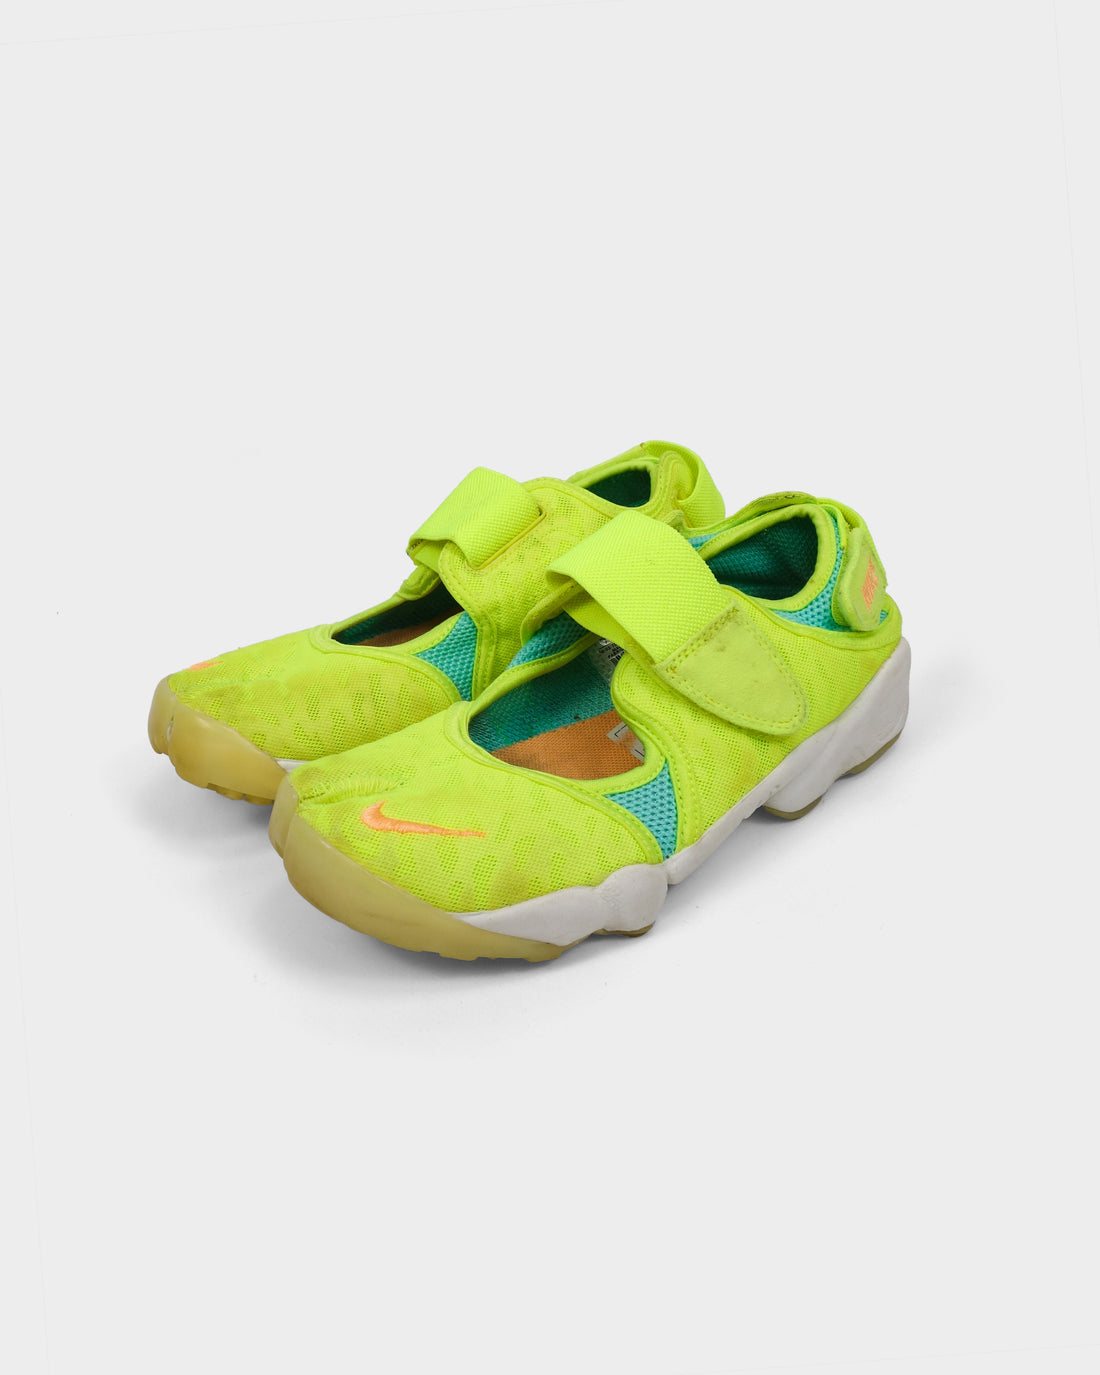 Nike Air Rift Textured Neon Green Sample 2015